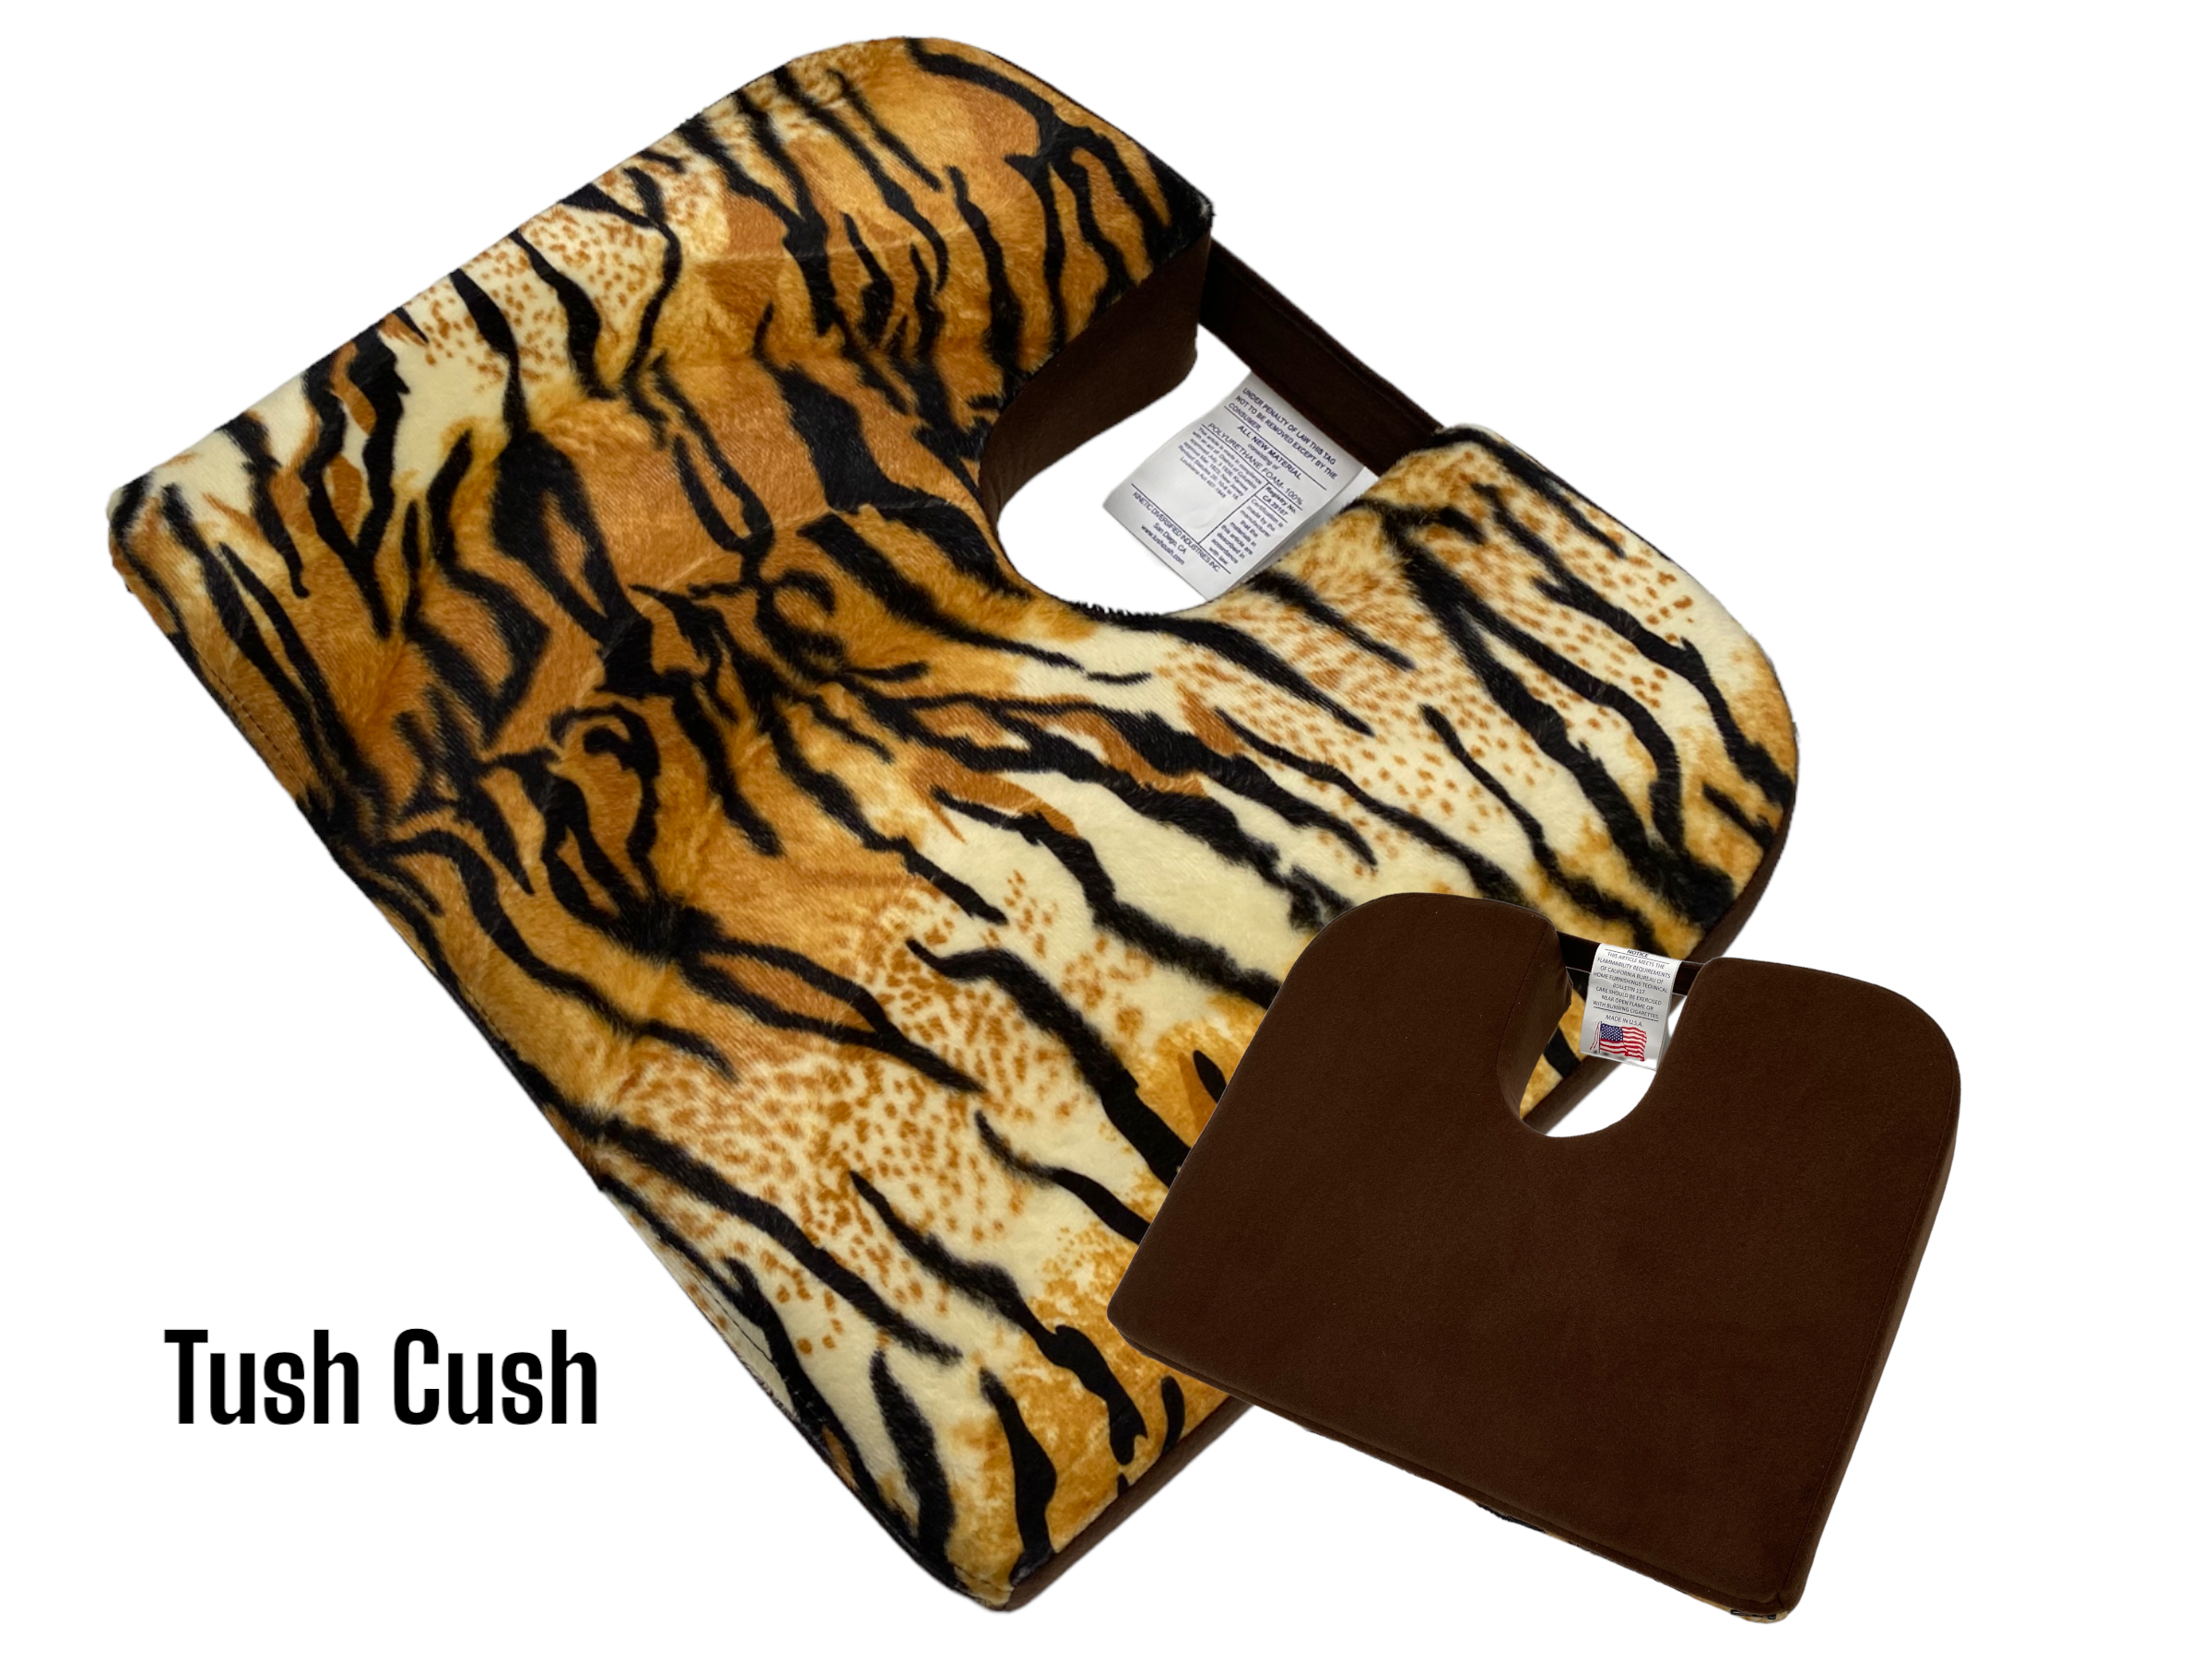 Original Tush Cush Orthopedic Seat Cushion 14x18 Wild Cat Reg $59